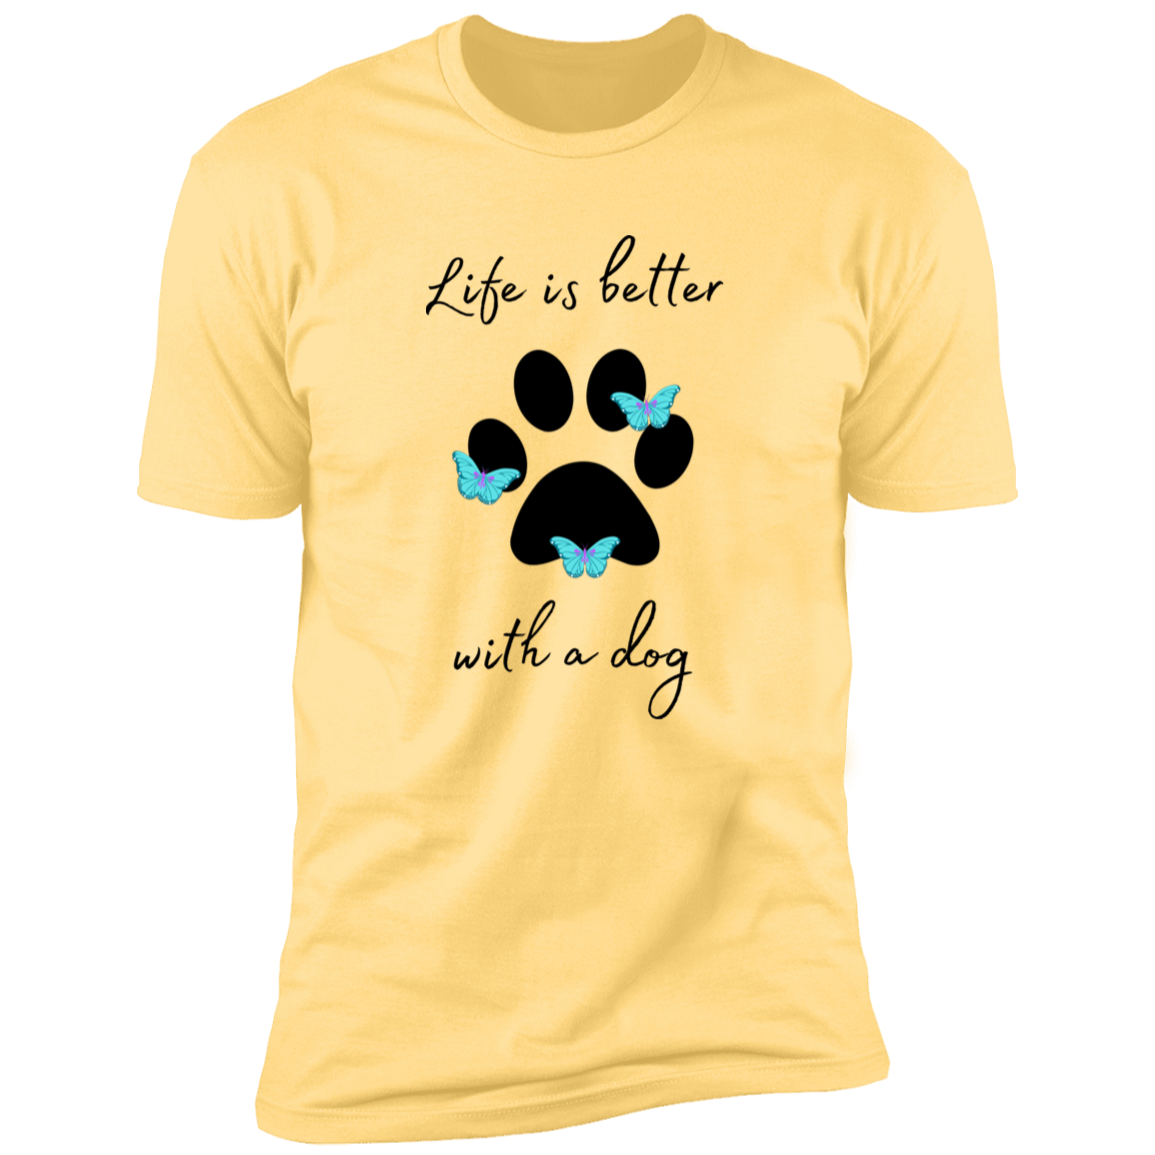 Kitt-Tea T-Shirt, kitty tea shirt, Cat Shirt for humans, funny cat shirt, in banana cream